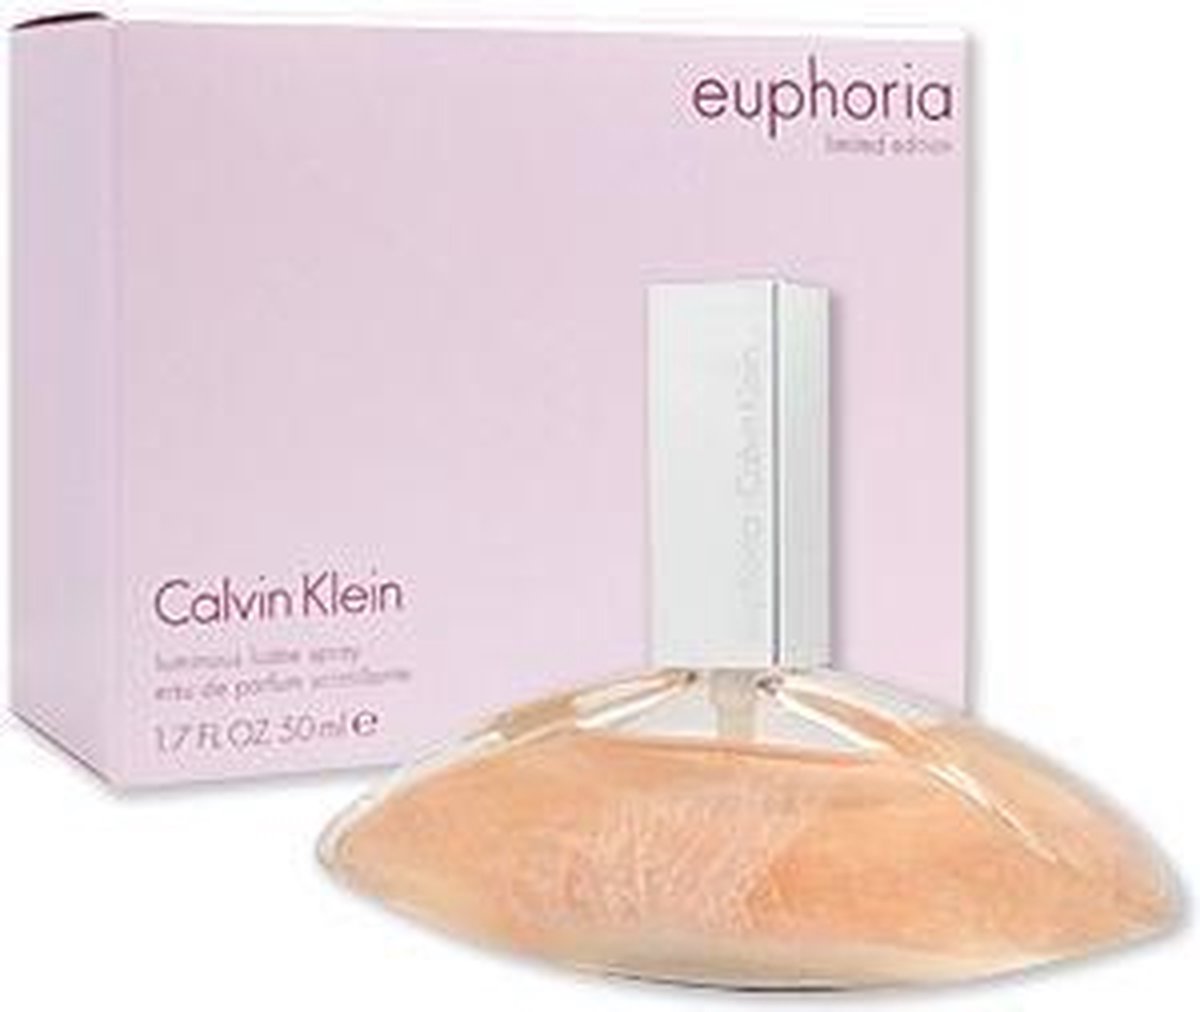 Calvin Klein Euphoria Luminous Lustre Edition - 50 ml - eau de parfum | bol